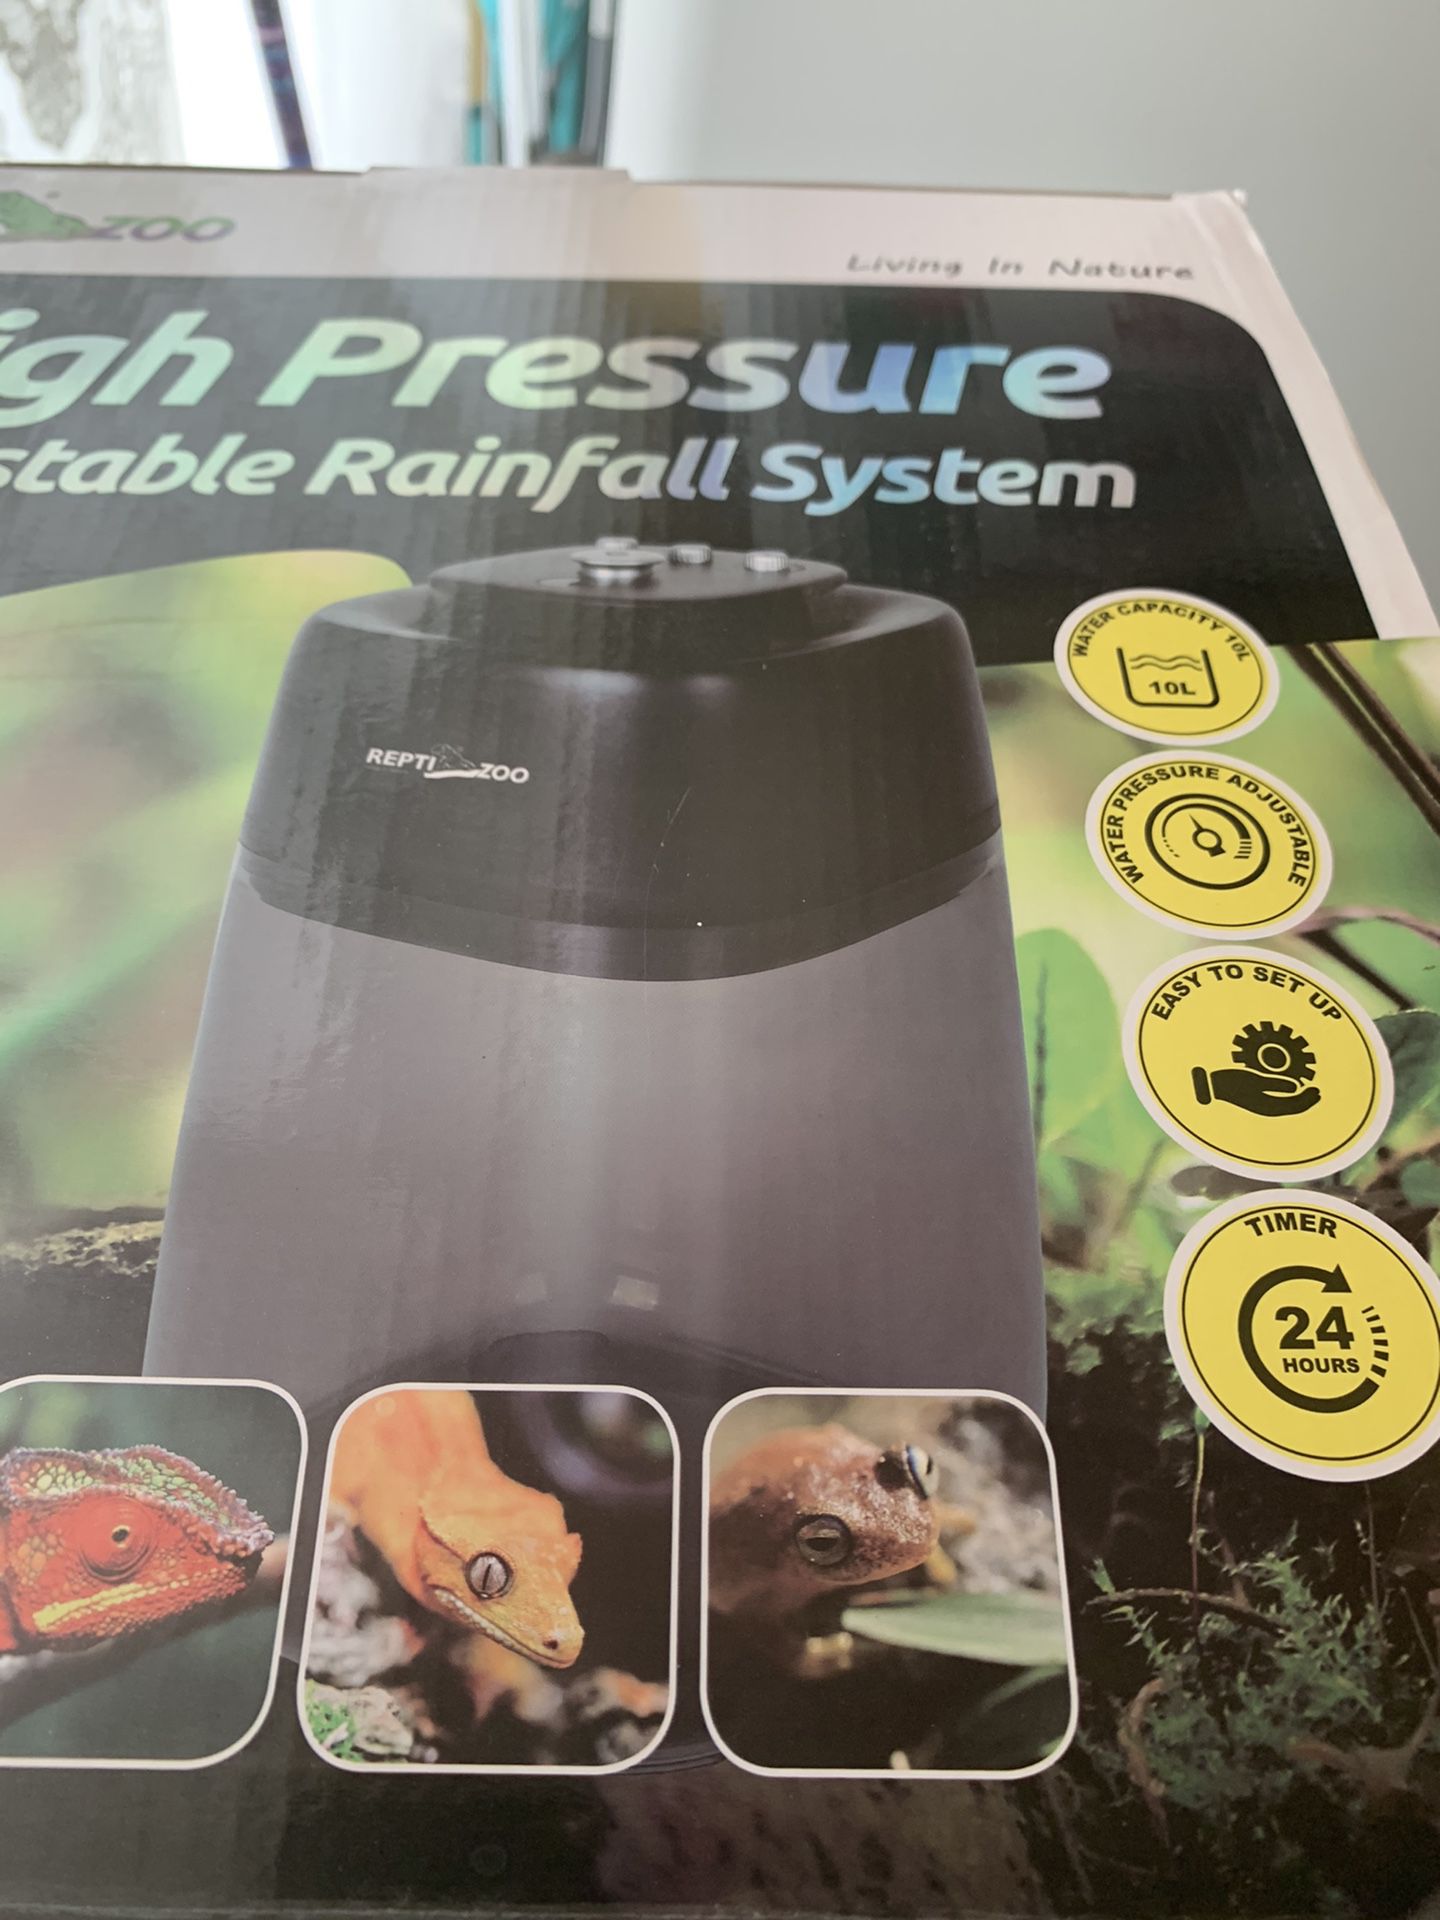 High Pressure Adjustable Rainfall System